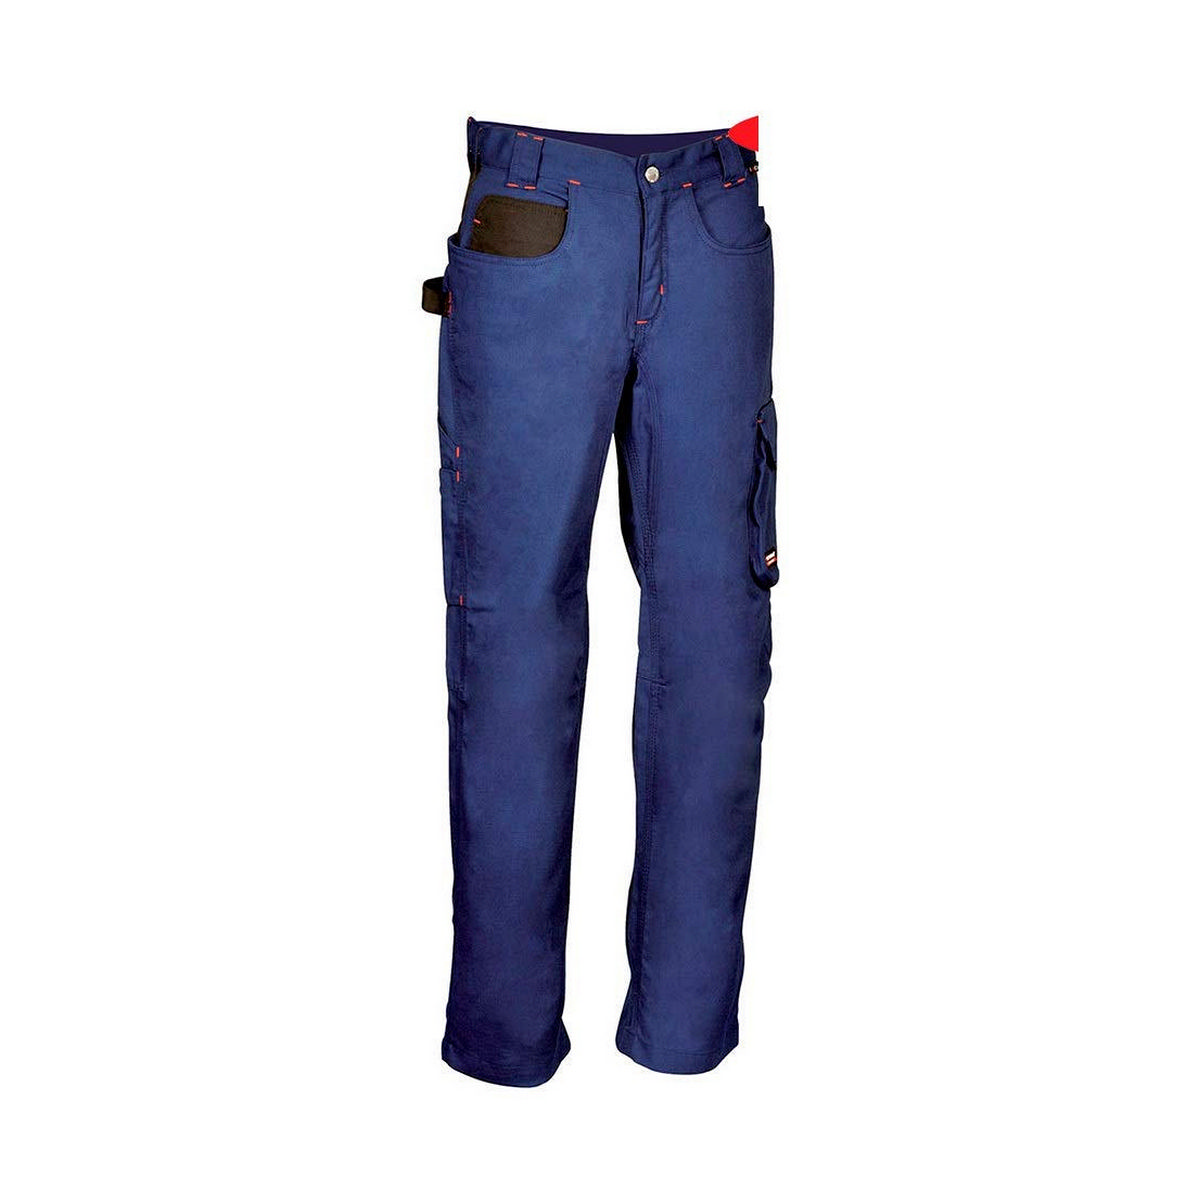 Pantaloni de siguranță Cofra Walklander Femeie Negru Bleumarin - Mărime 34